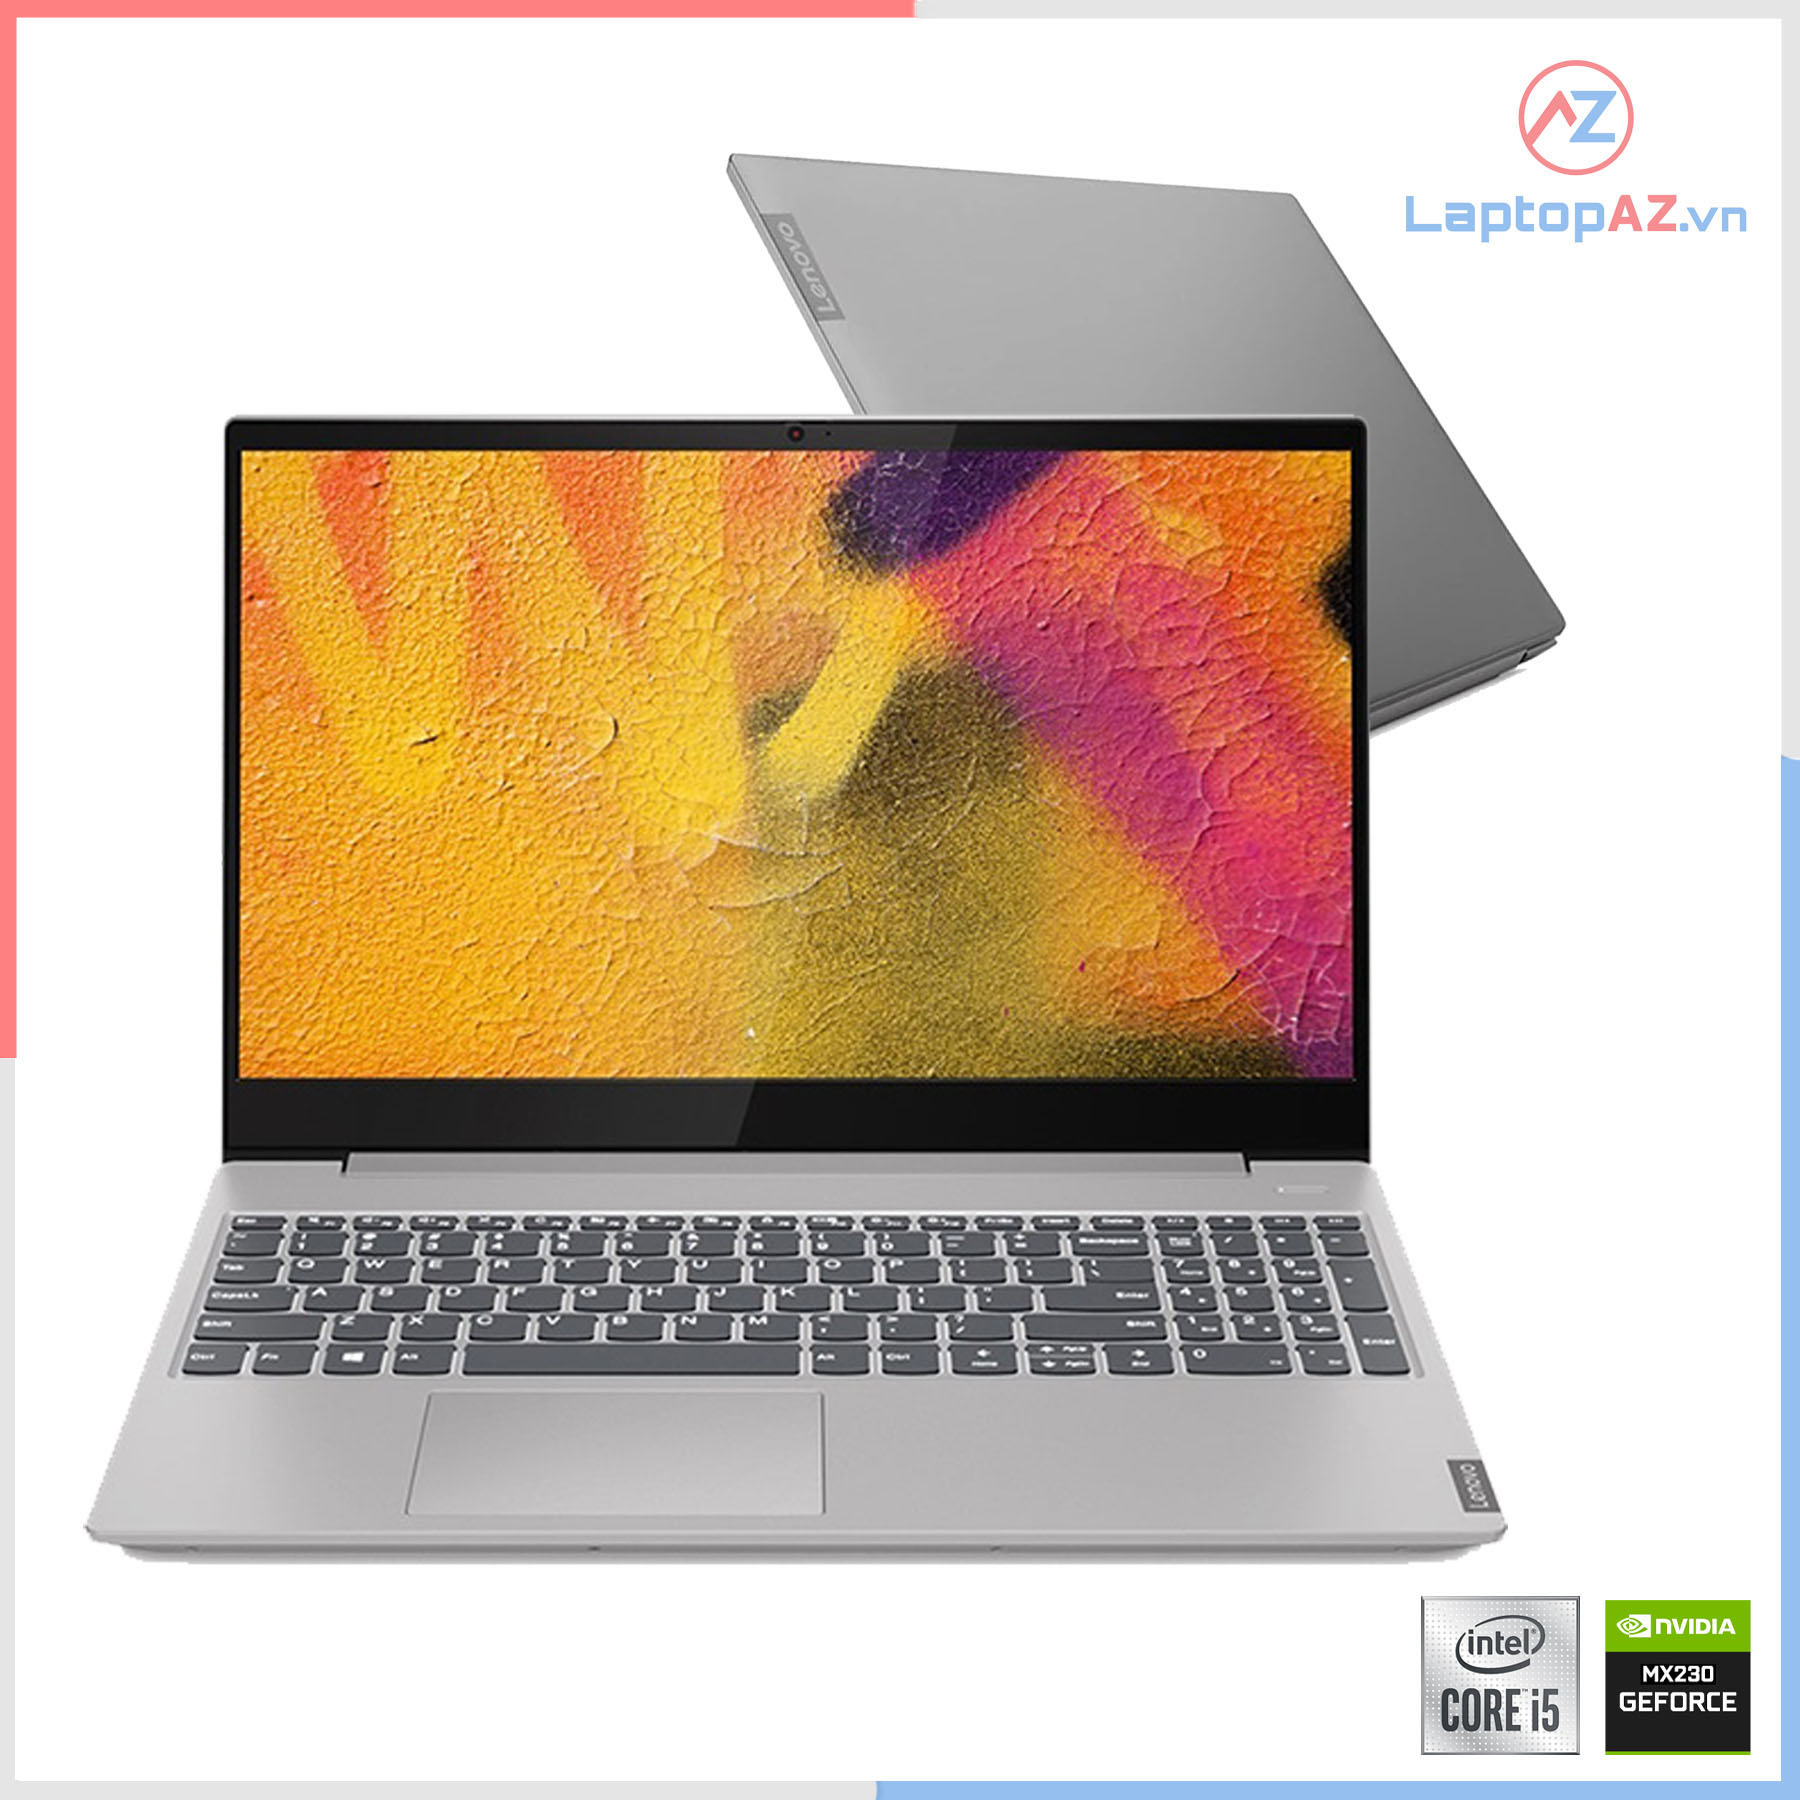 Laptop cũ Lenovo Ideadpad S340 - Core i5 8265U, 8GB, 1TB, VGA 2GB NVIDIA GeFore MX230, 14 inch FHD